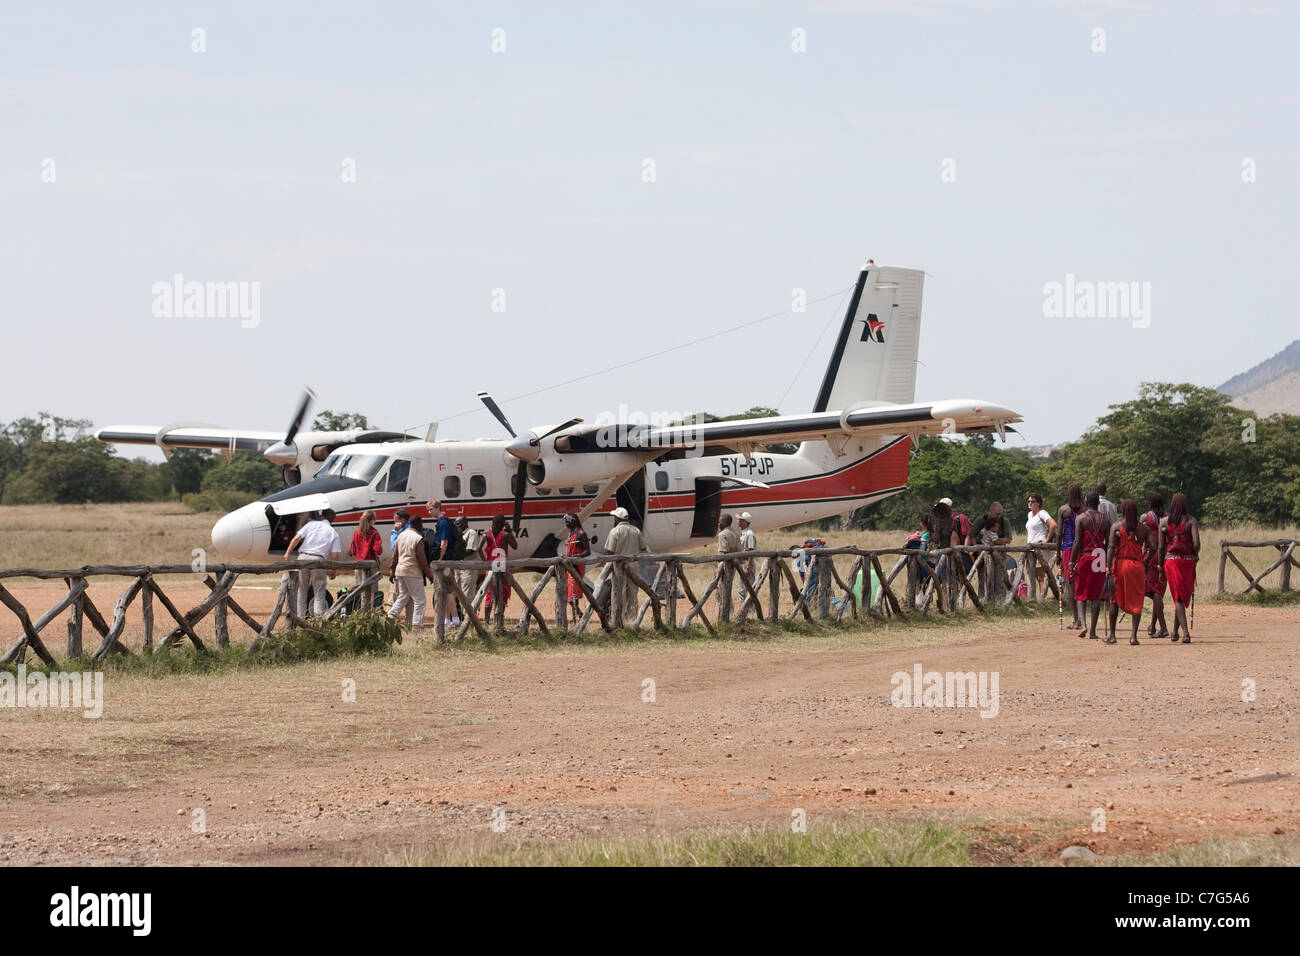 Flugzeug bereit für abheben von Masai Mara National Reserve, Kenia, Afrika fliegen. Foto: Jeff Gilbert Stockfoto